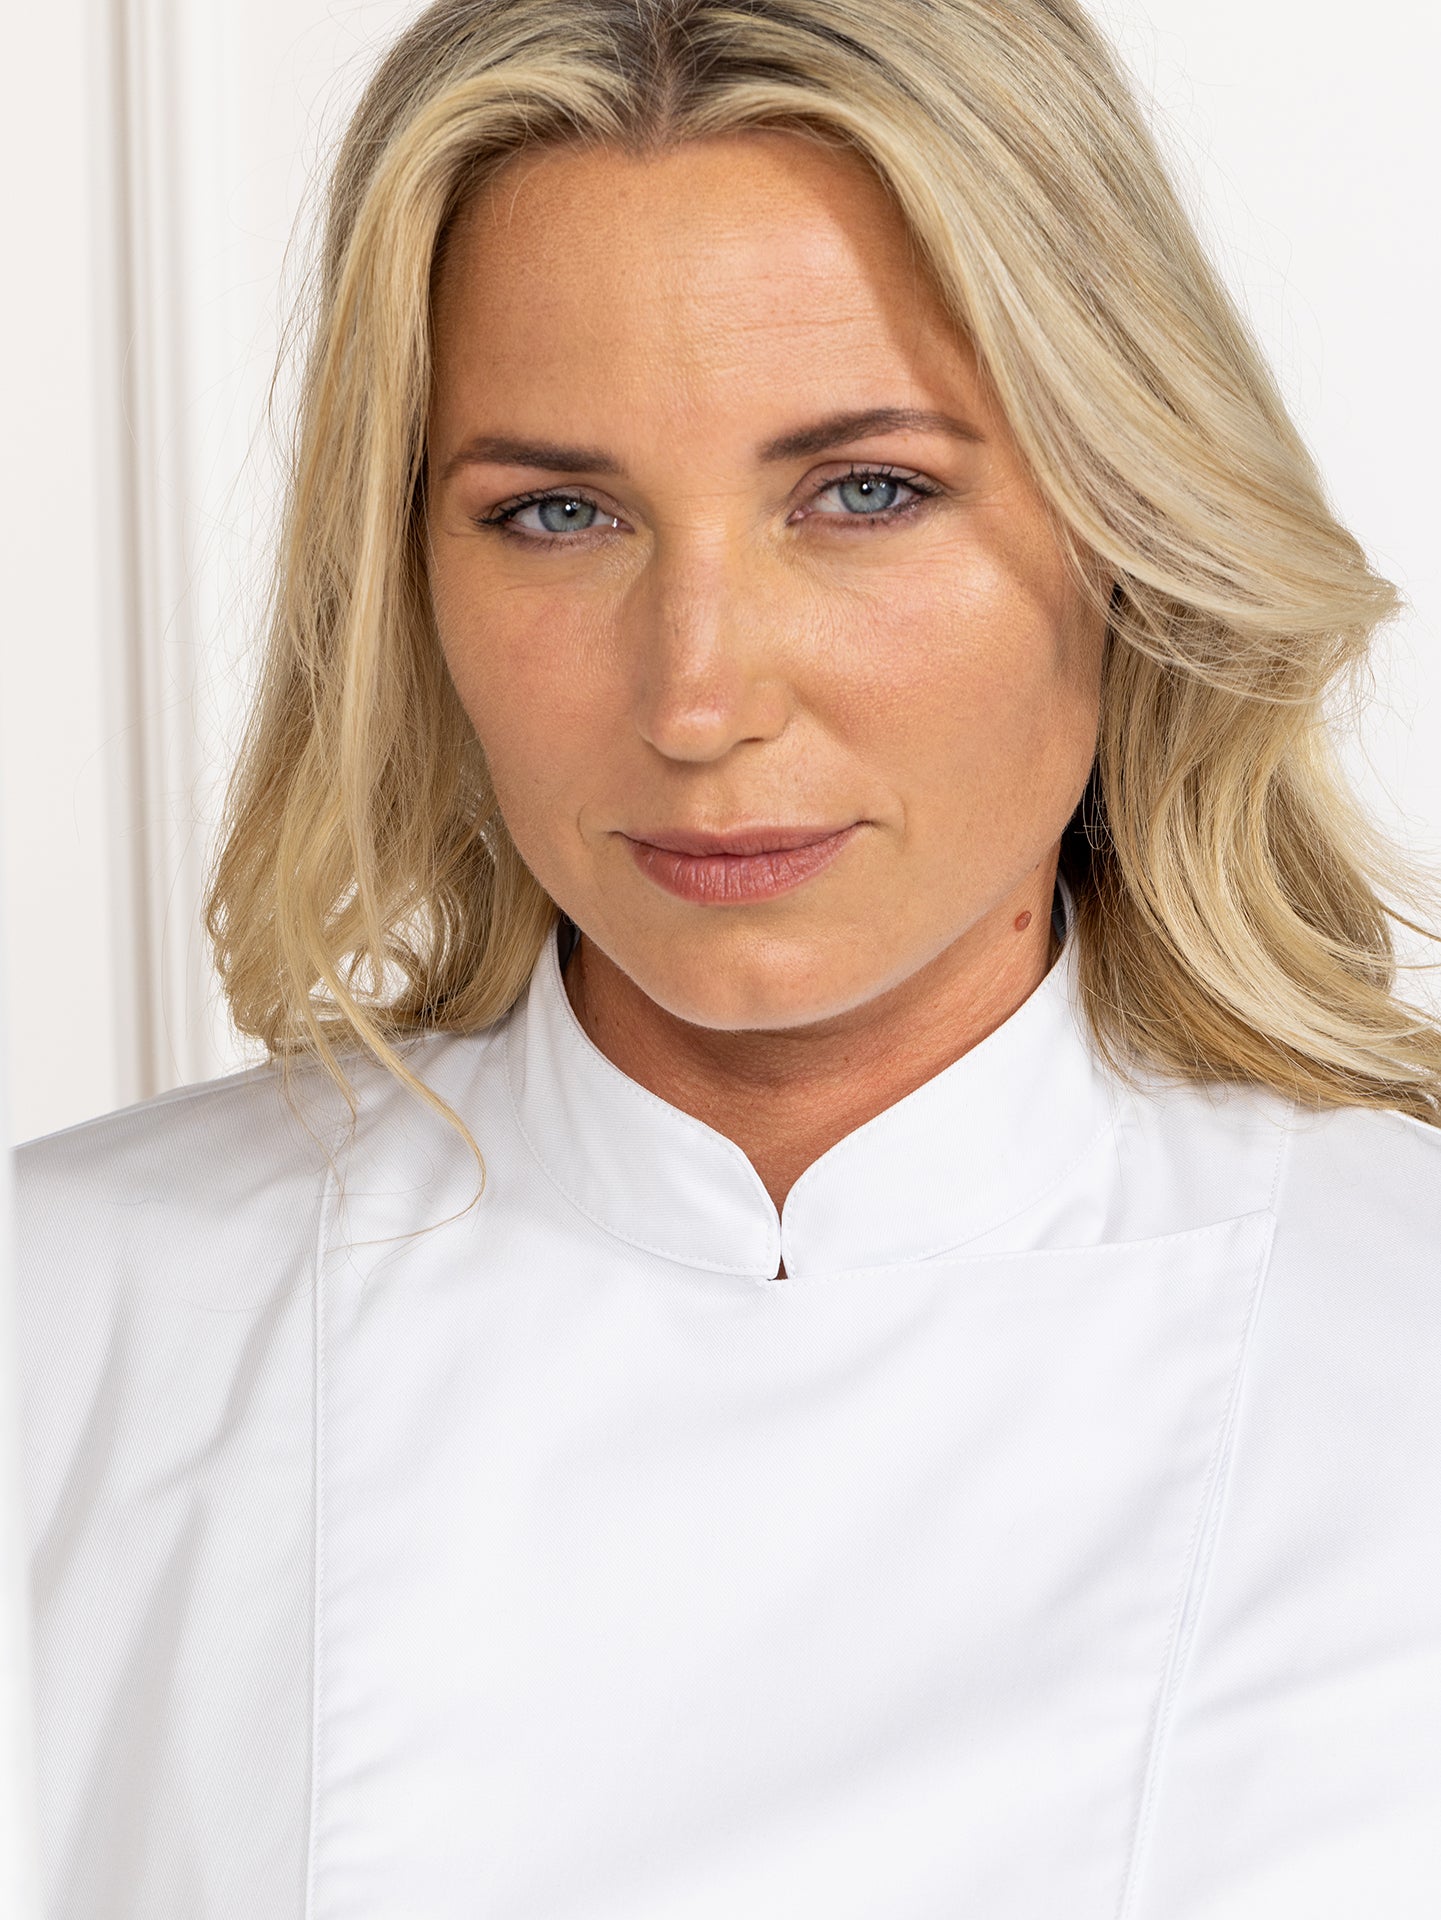 Chef Jacket Lynn White by Le Nouveau Chef